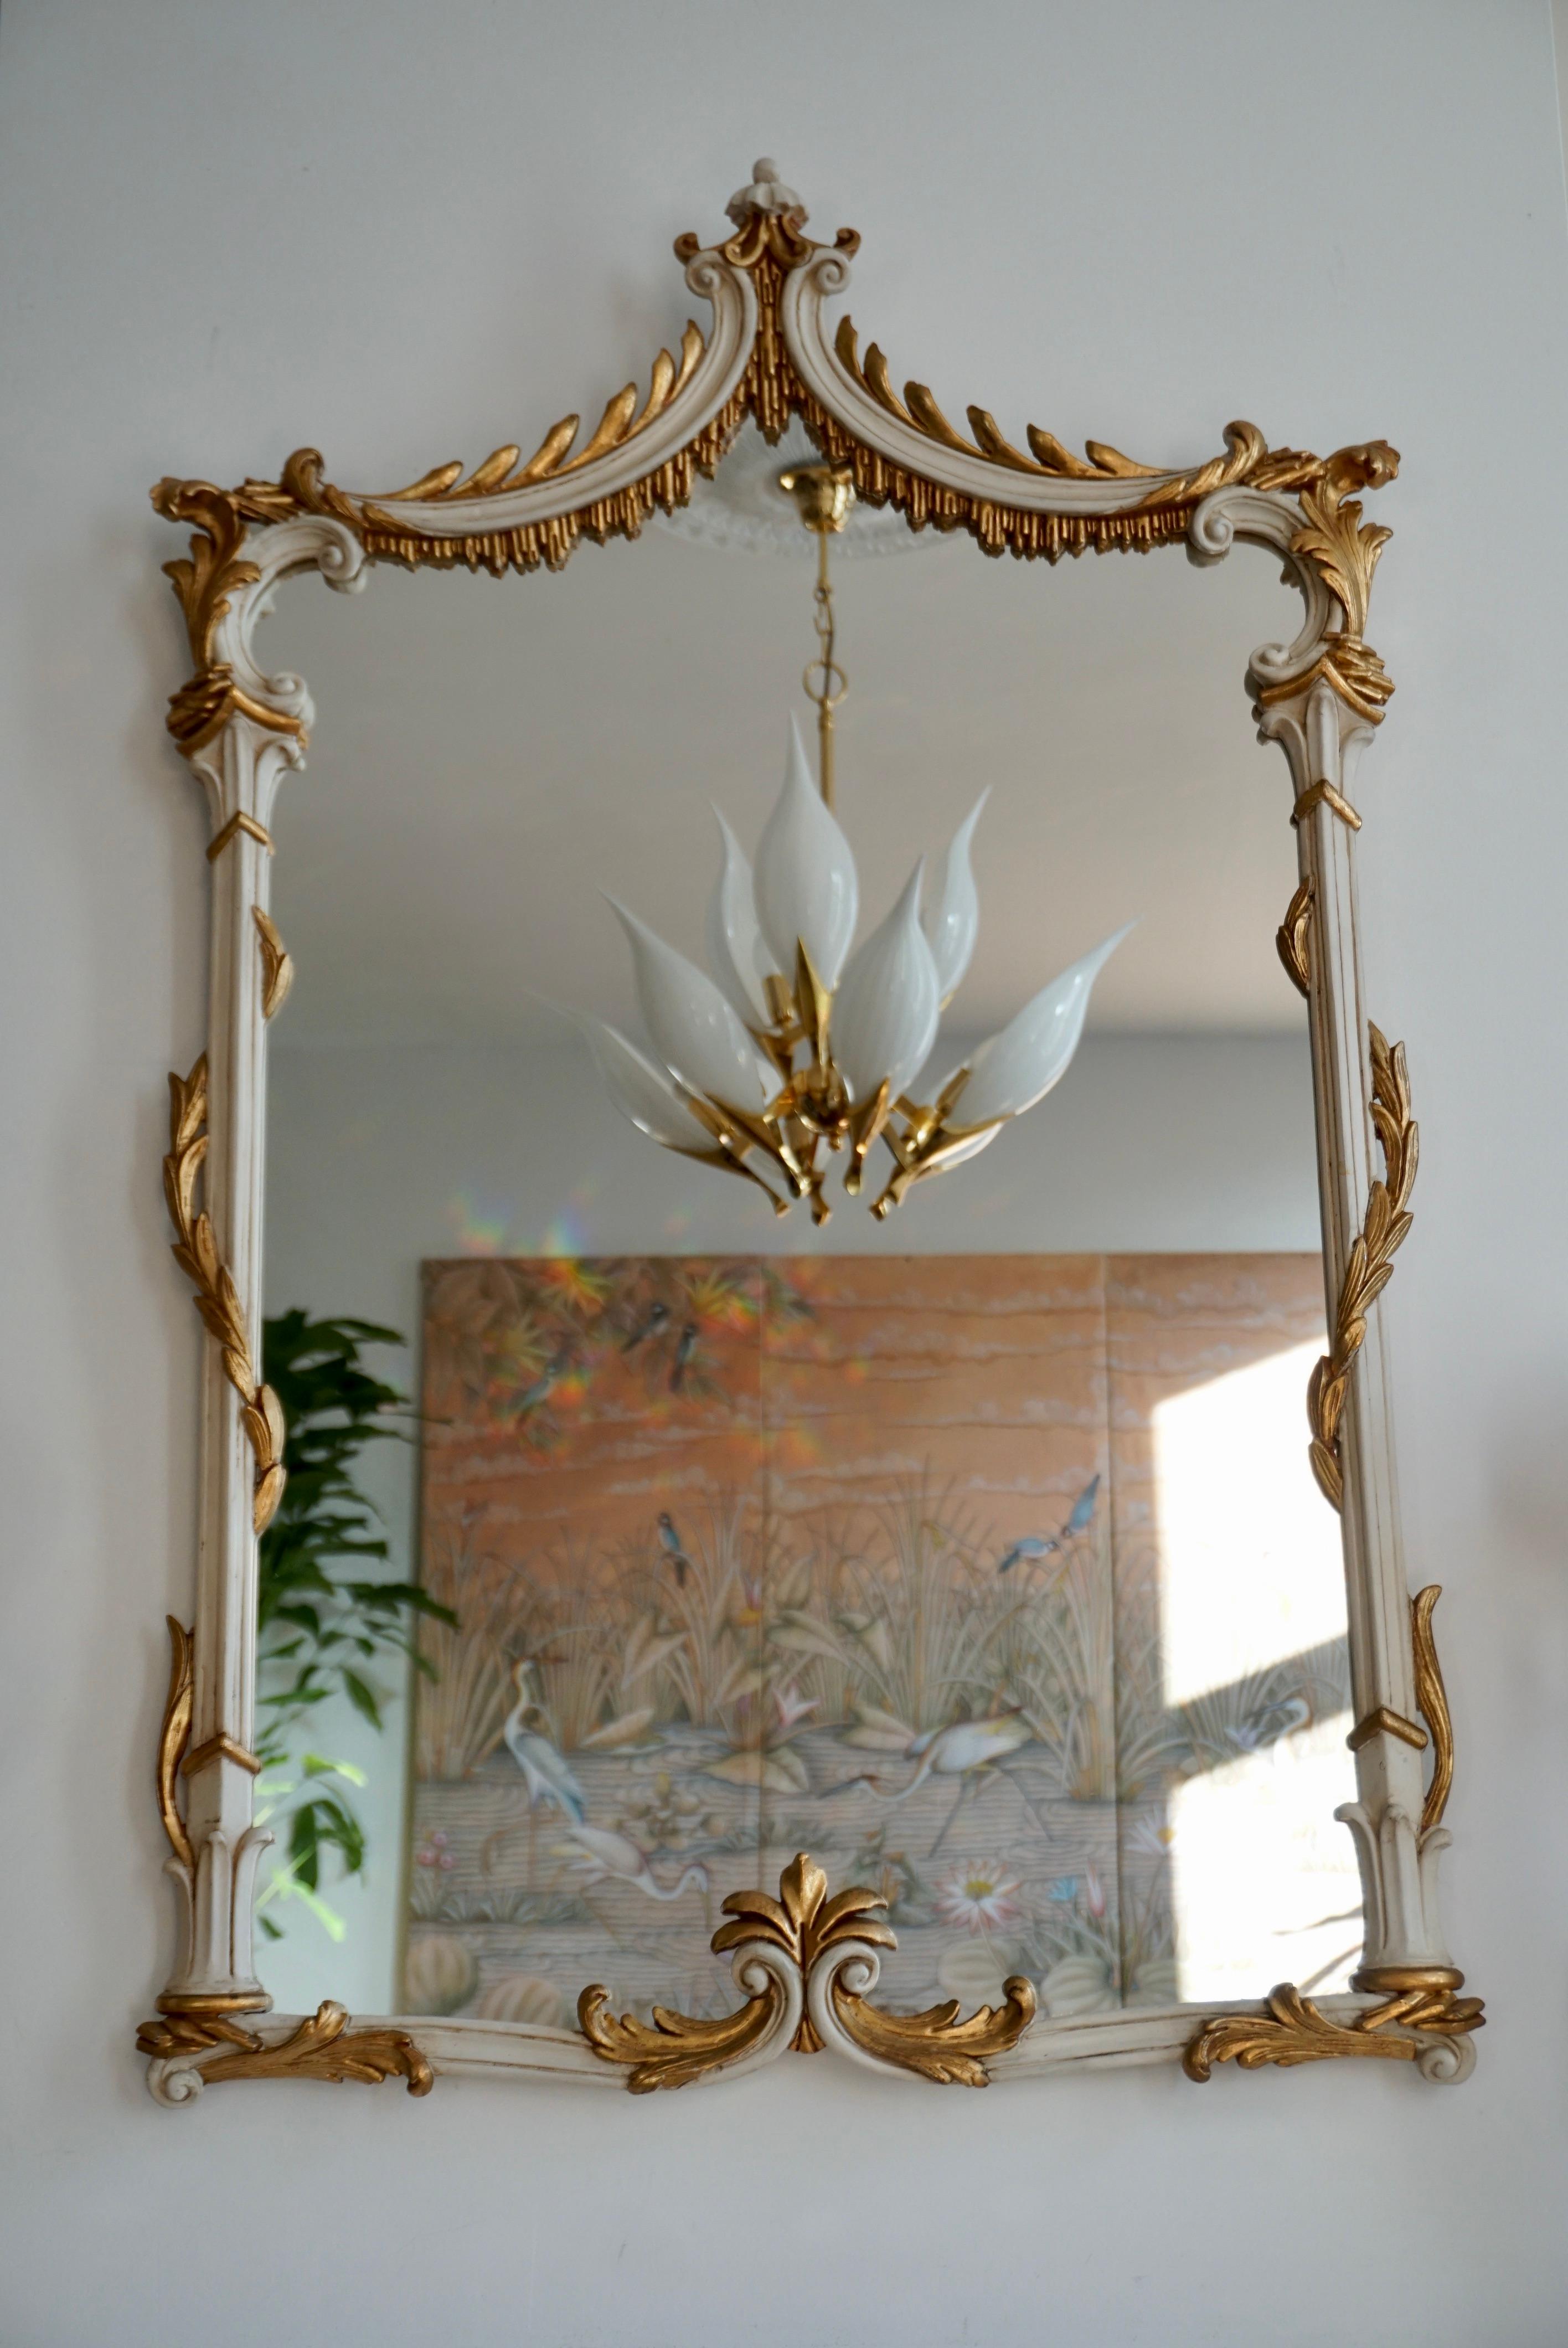 Beautiful Italian gilded rococo style mirror.

Height 47